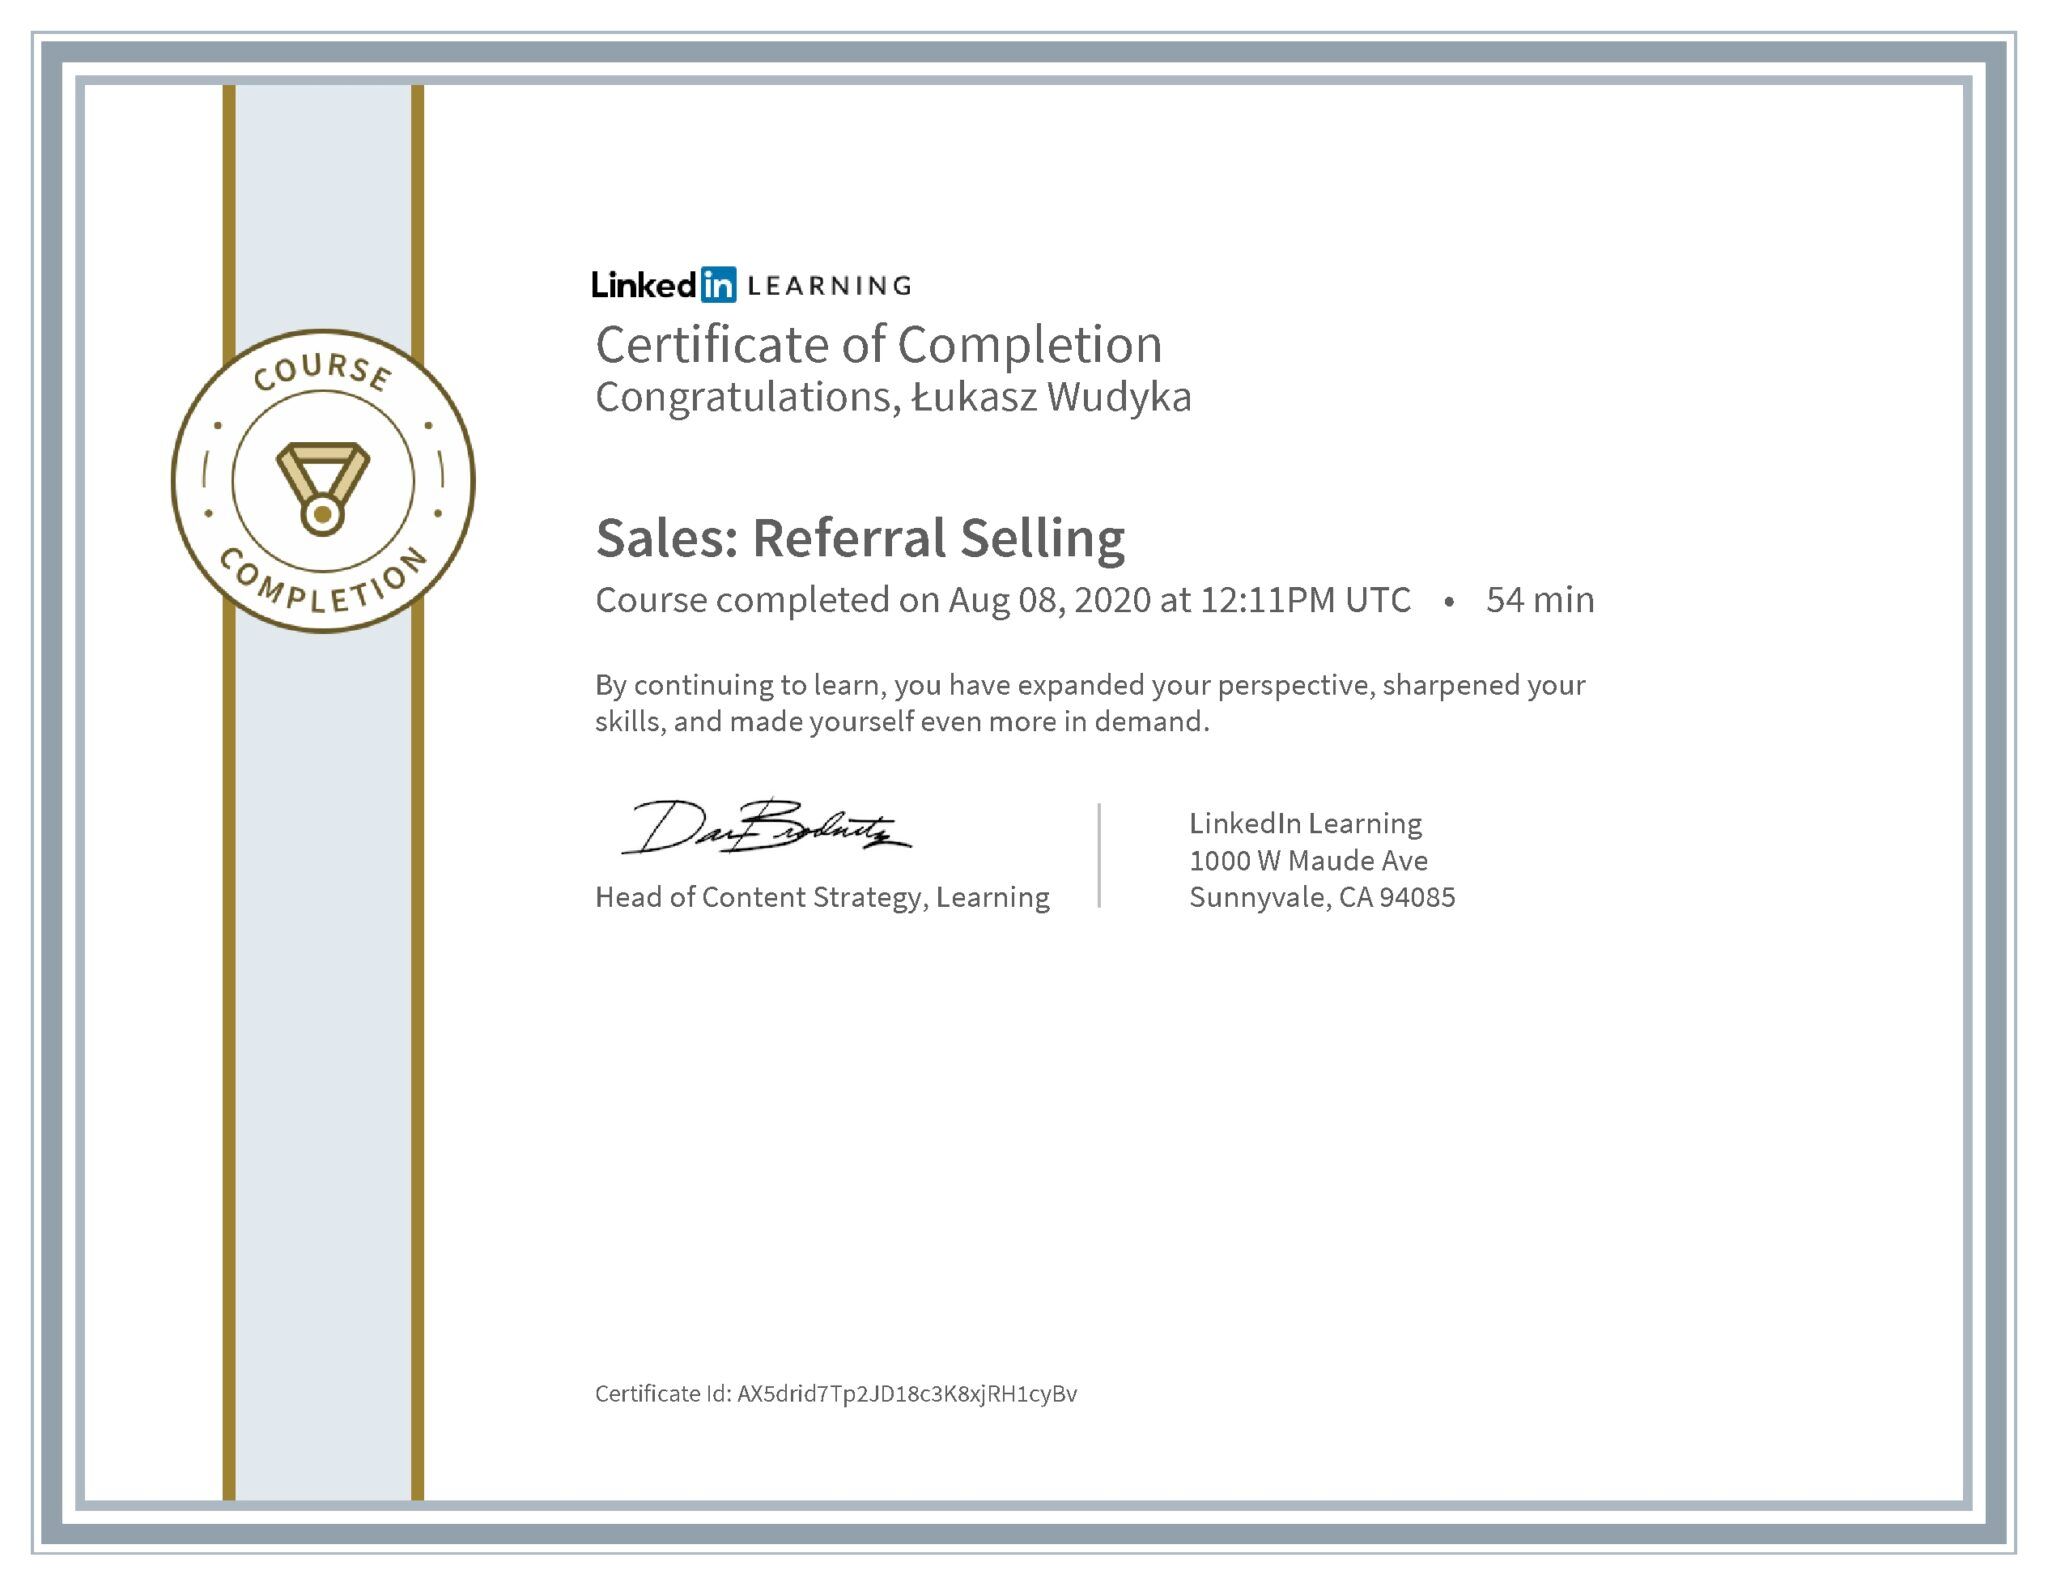 Łukasz Wudyka certyfikat LinkedIn Sales: Referral Selling